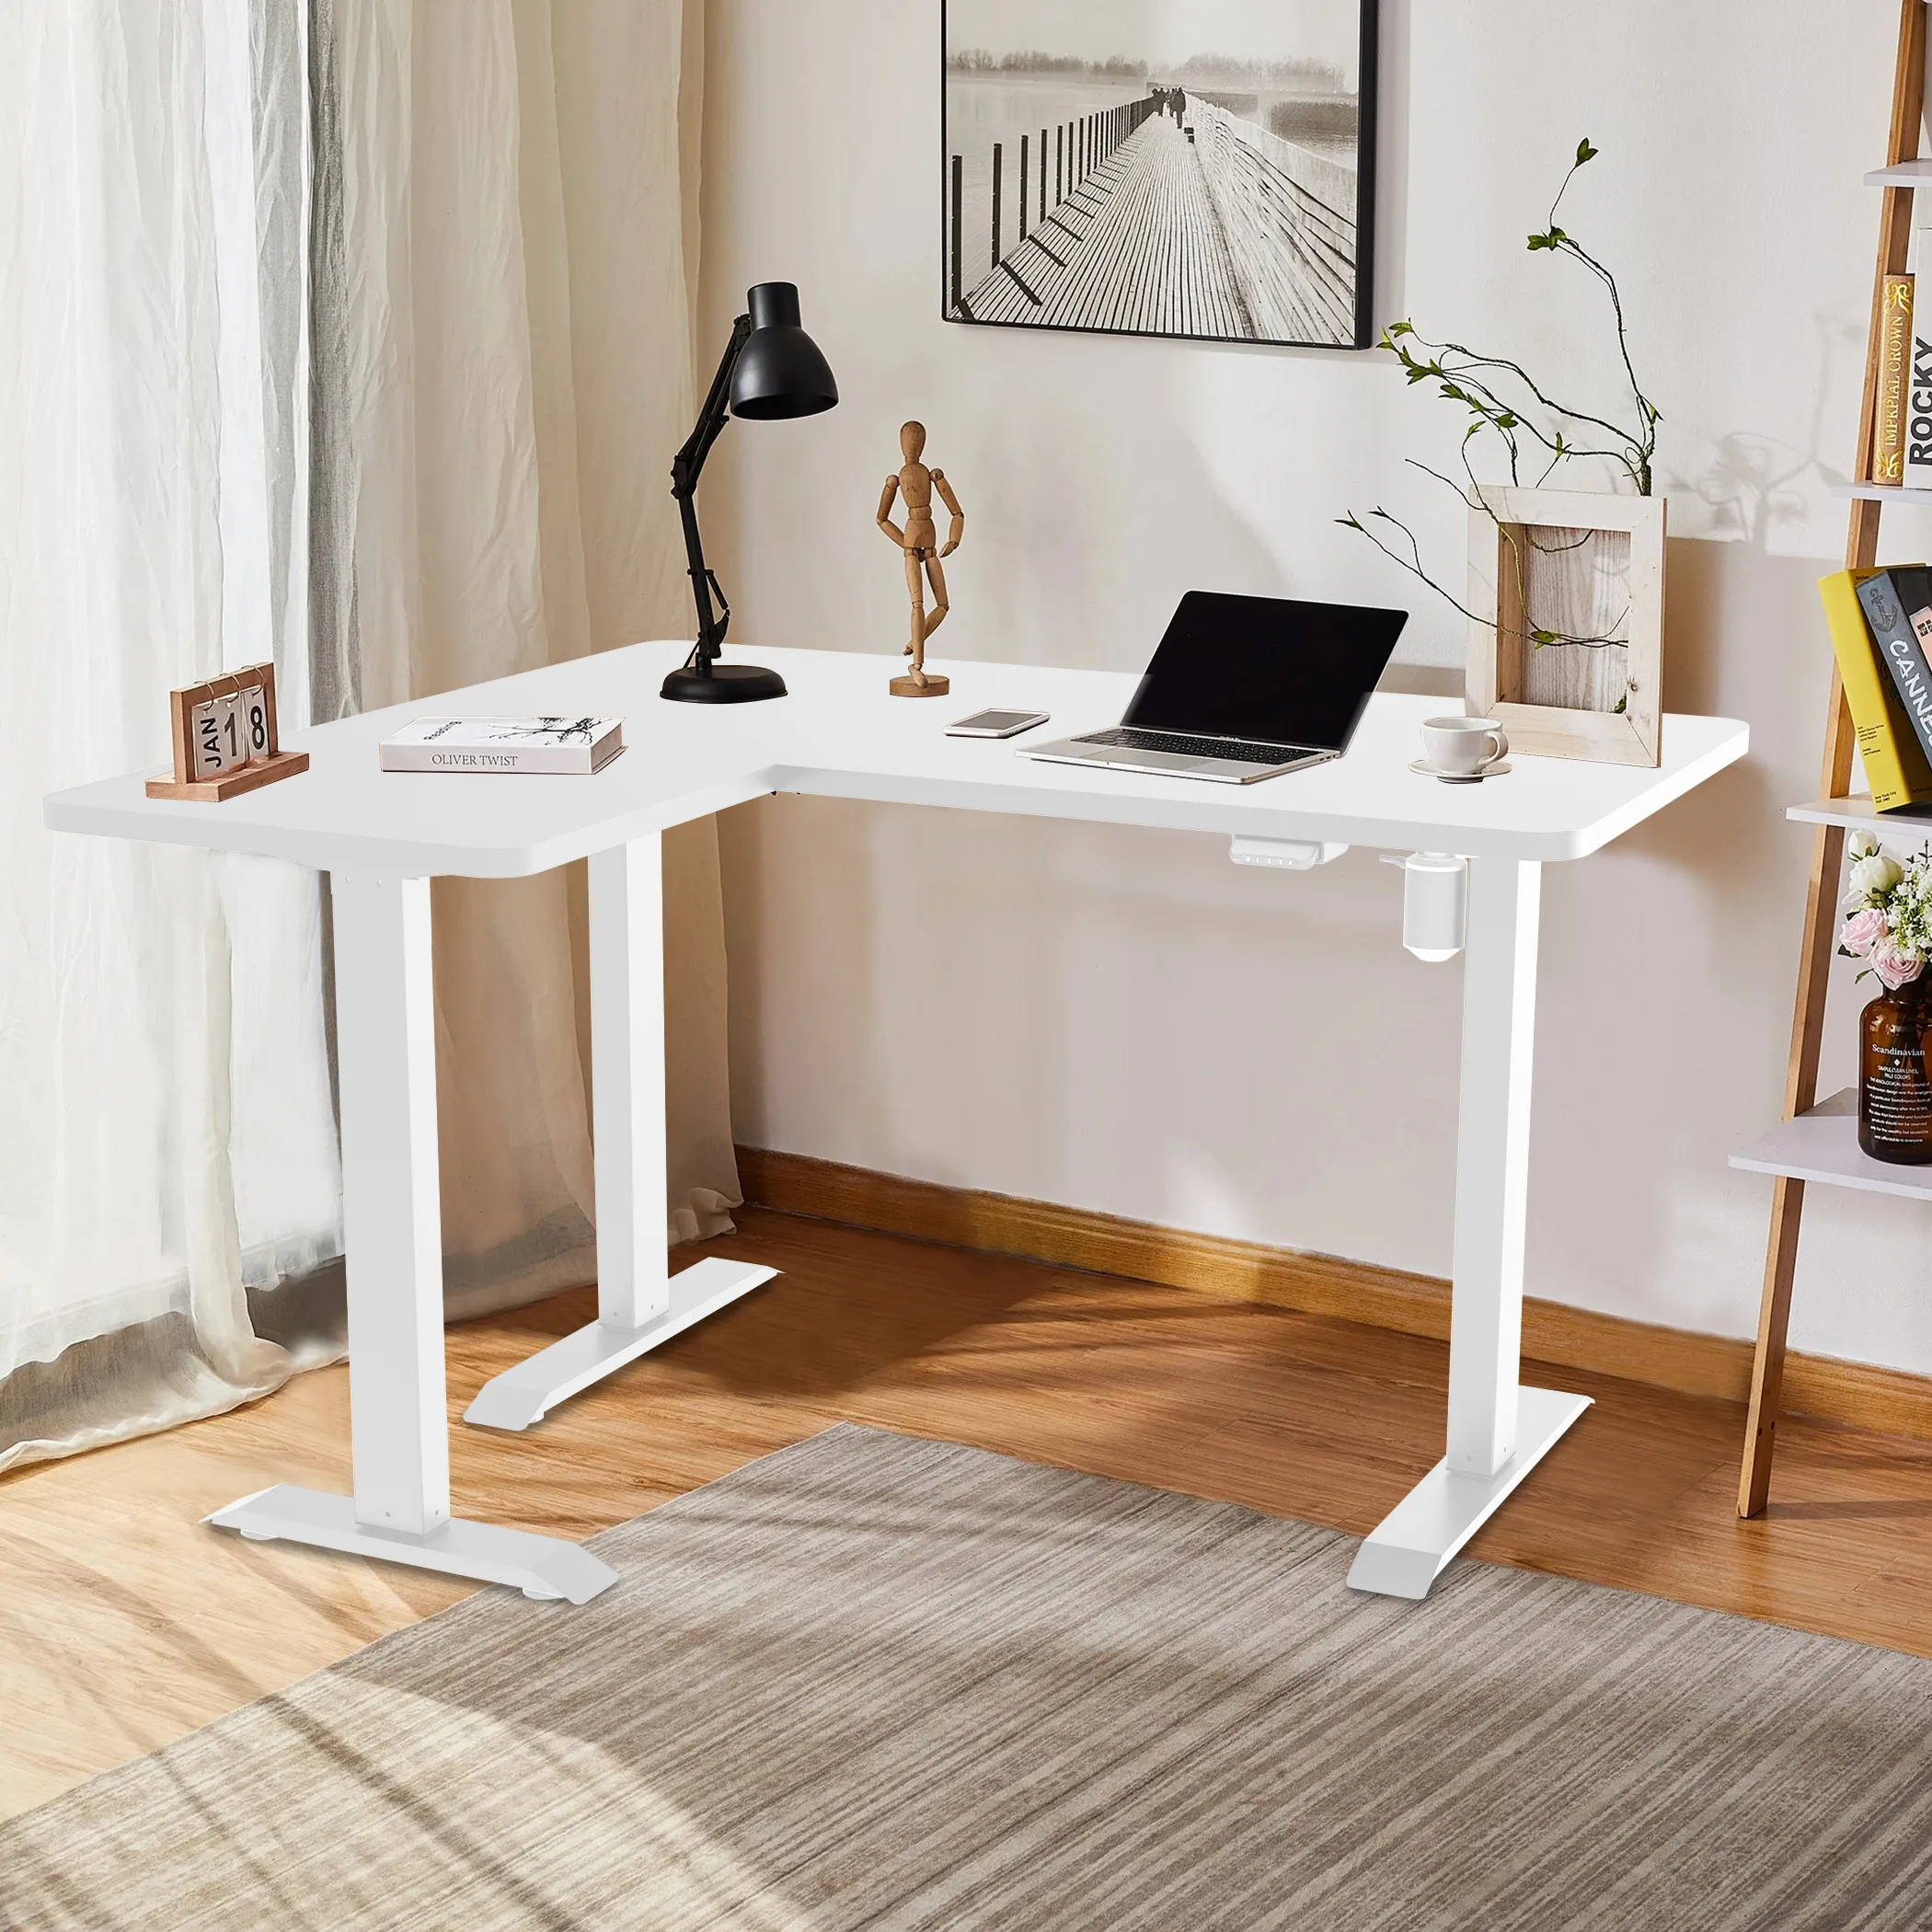 Electric adjustable sit stand desk